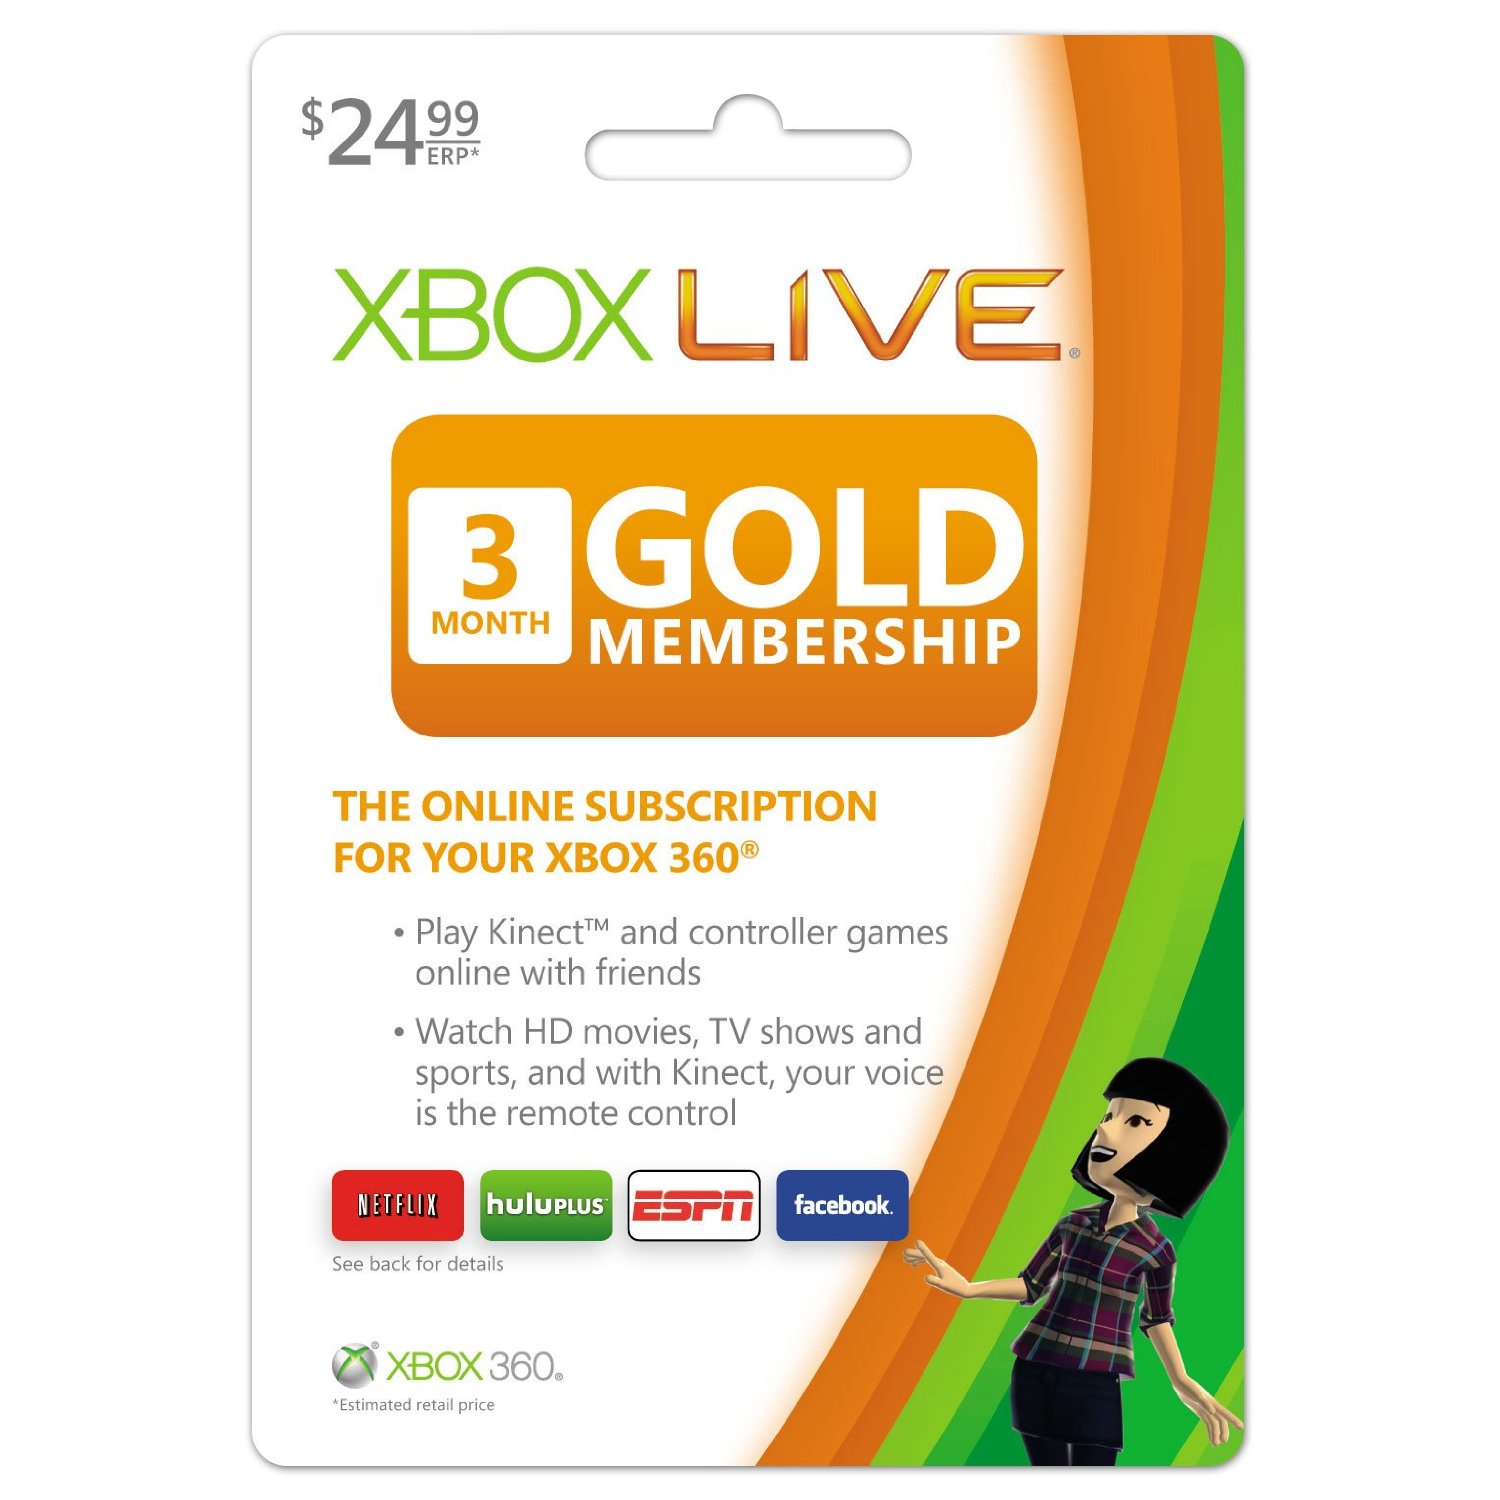 xbox live 3 month gold membership